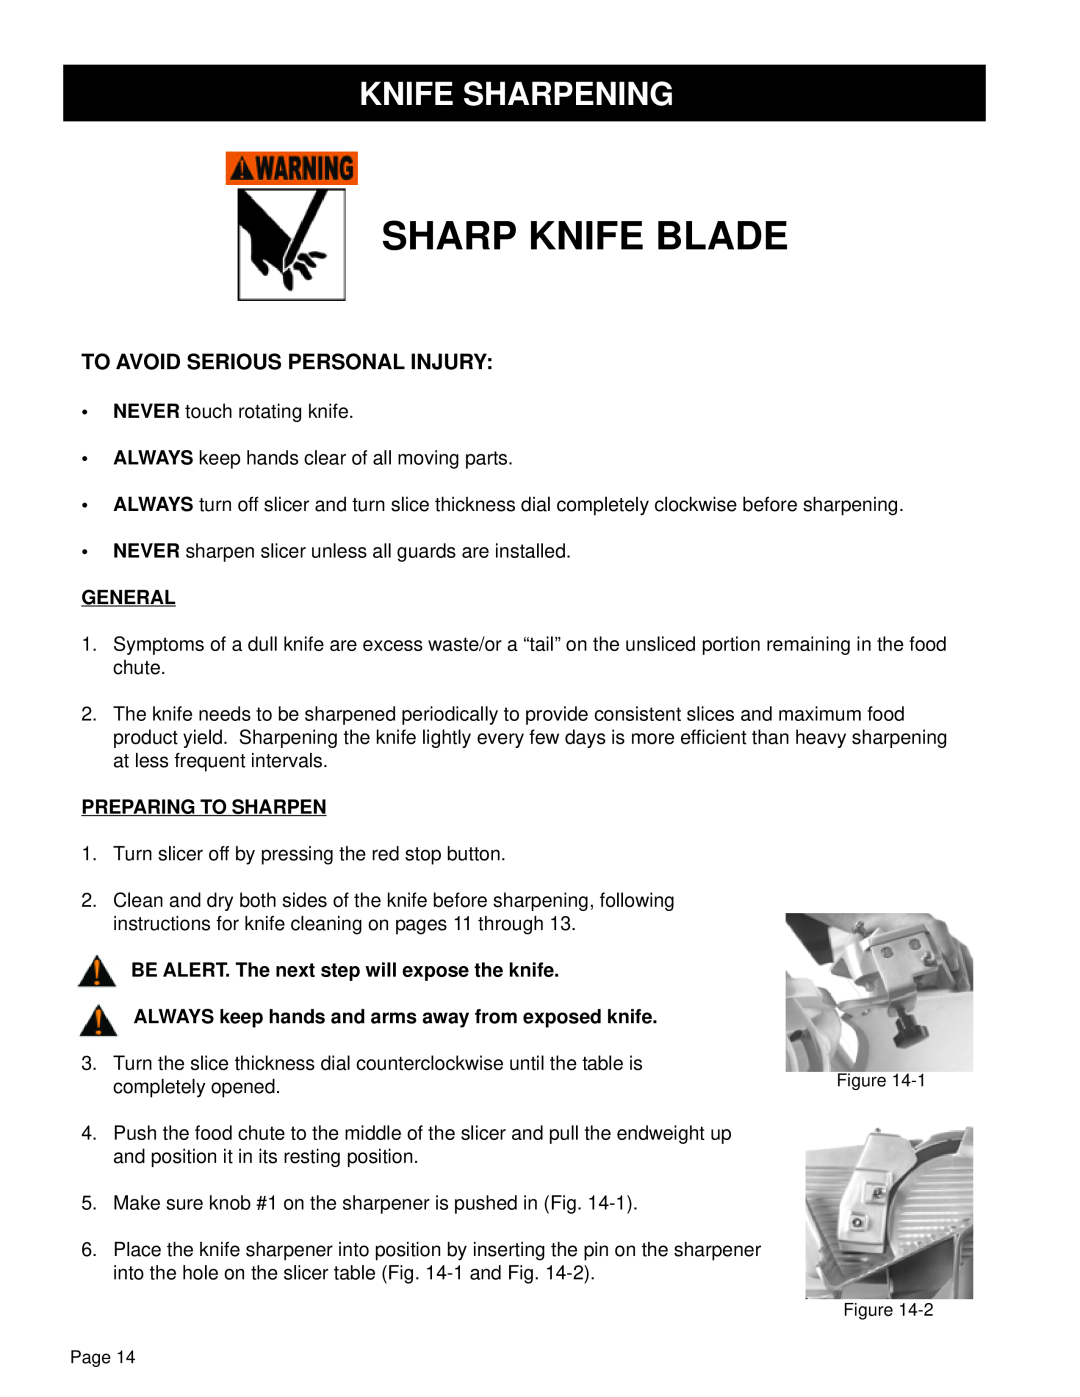 Globe GL12 Knife Sharpening, Sharp Knife Blade, To Avoid Serious Personal Injury, General, Preparing To Sharpen 